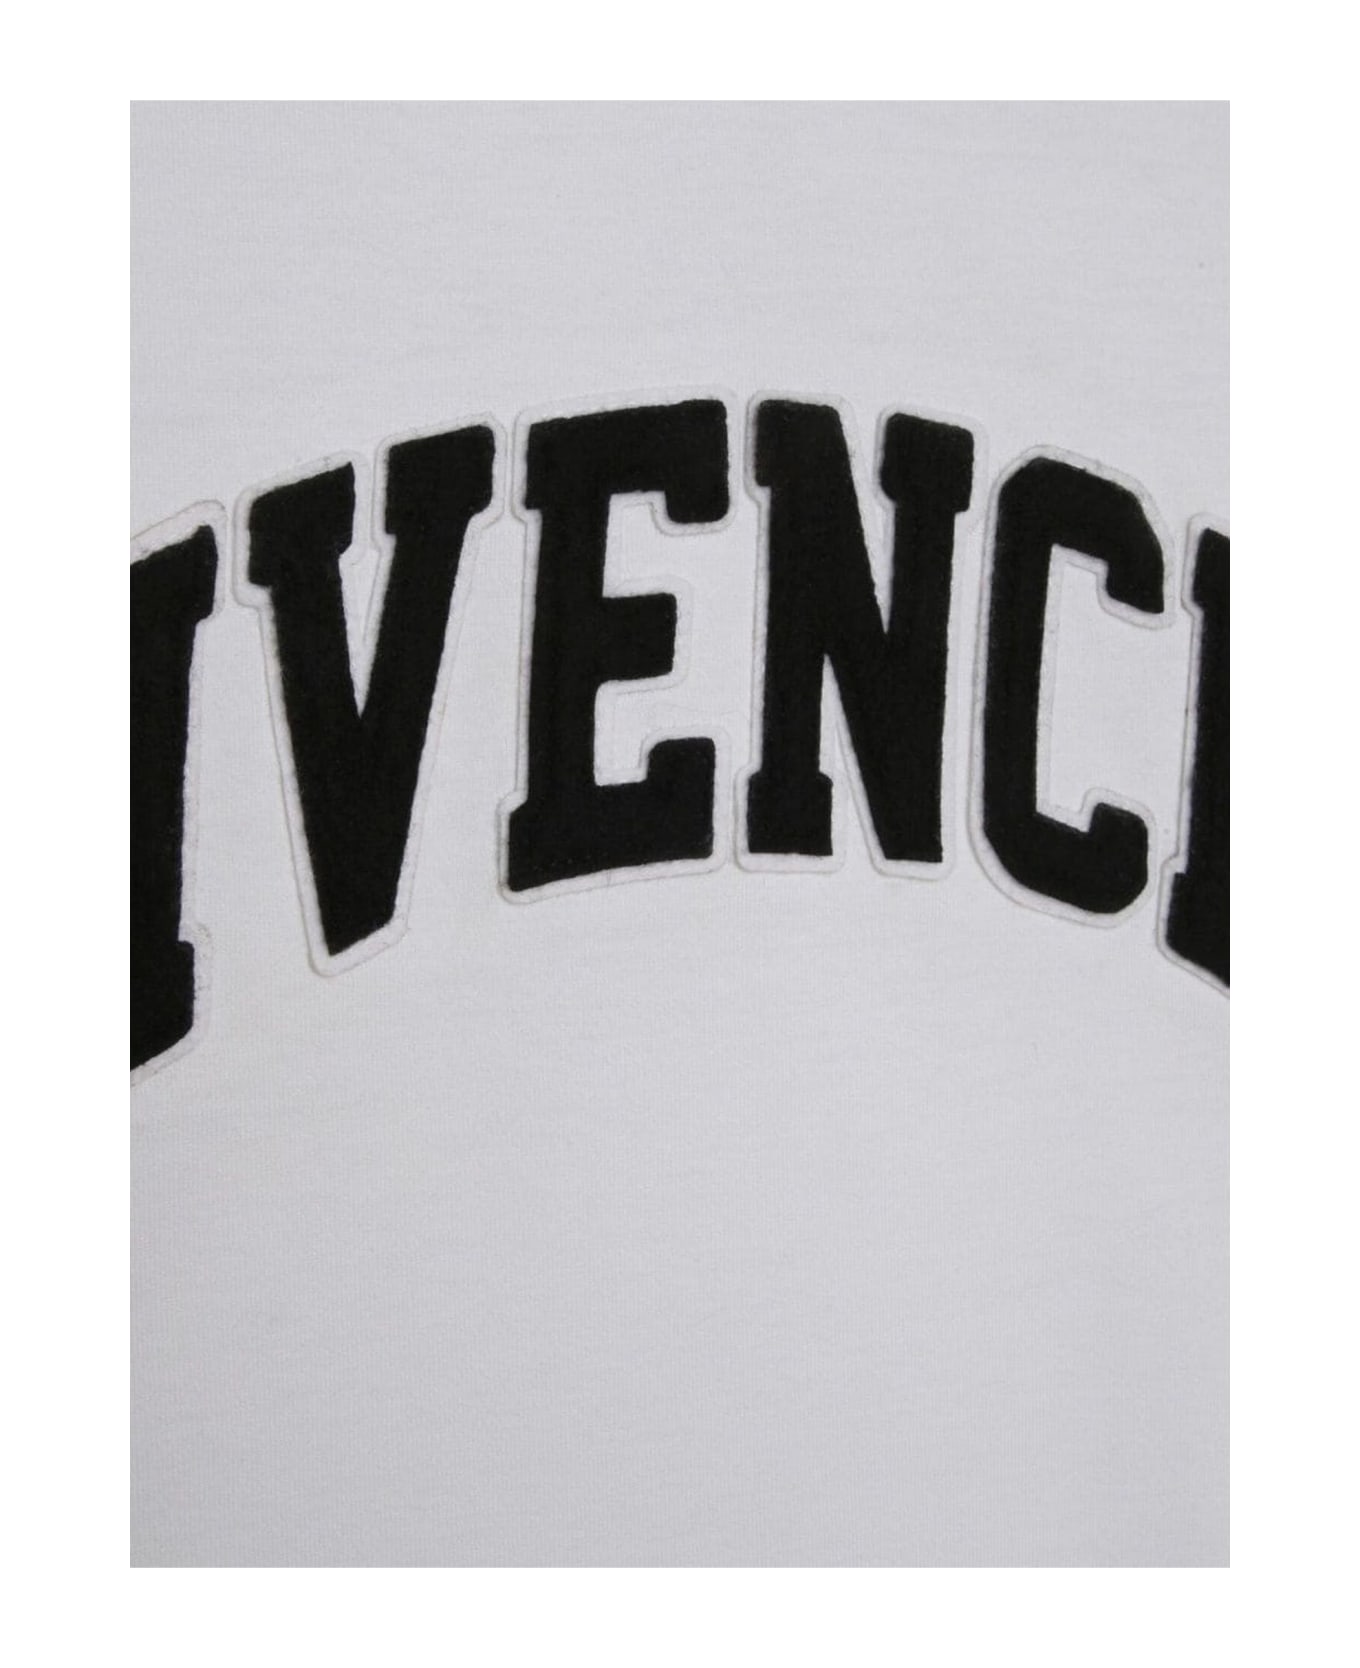 Givenchy White Cotton T-shirt - P Bianco Tシャツ＆ポロシャツ